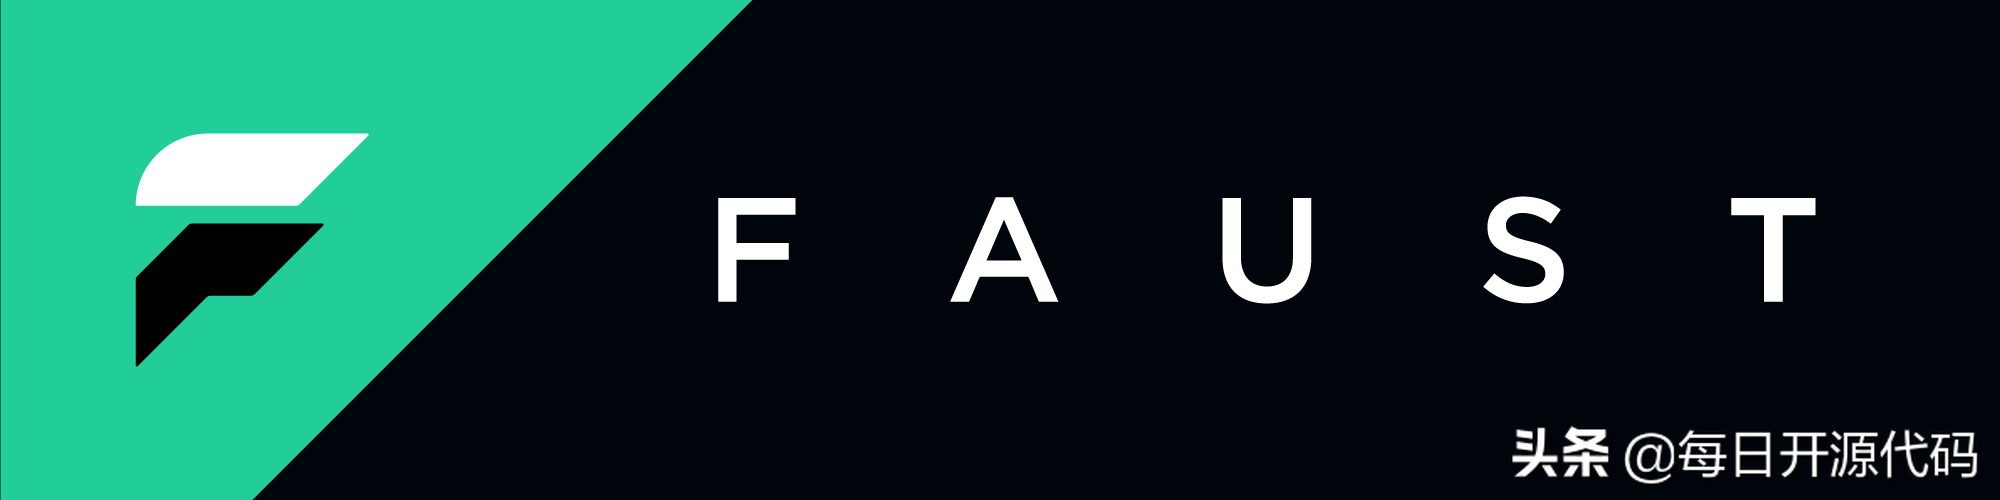 Faust - 简洁高效的 Python 流处理库